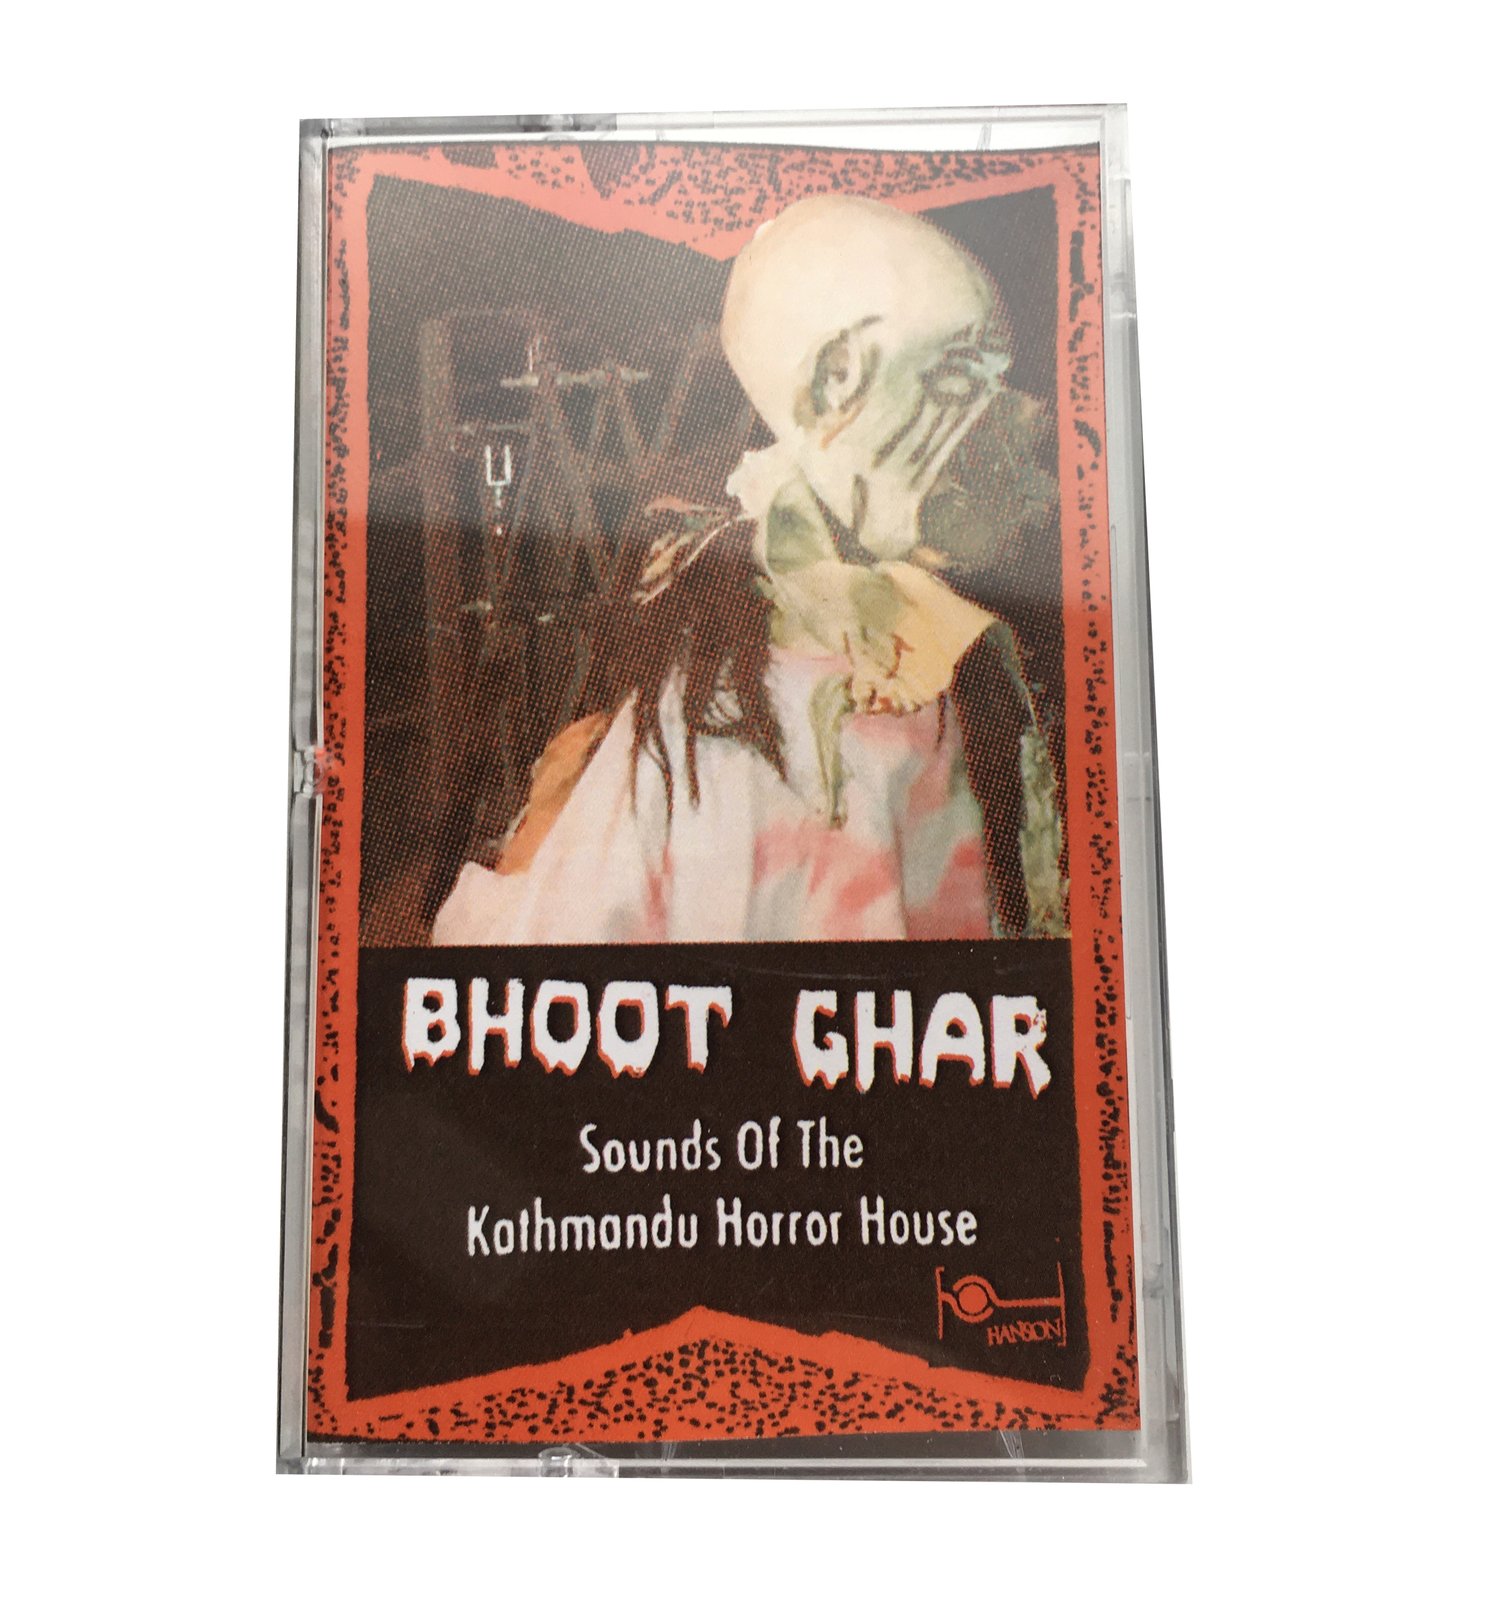 Bhoot Ghar: Sounds Of The Kathmandu Horror House - Aaron Dilloway cassette